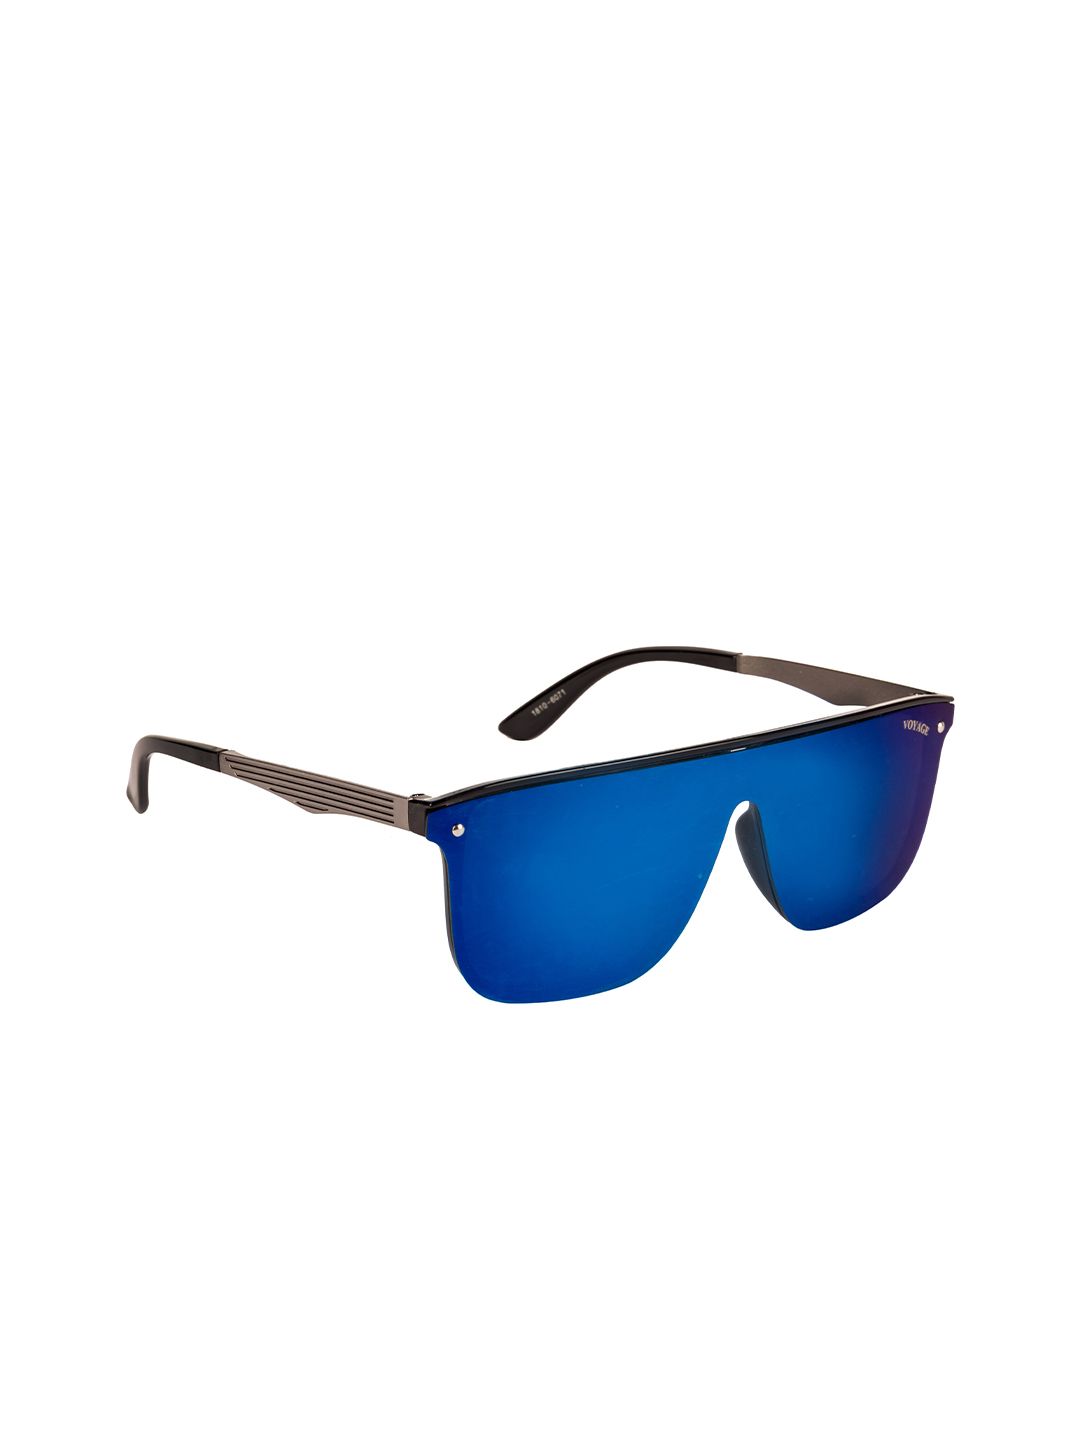 Voyage Unisex Blue Lens & Black UV Protected Lens Wayfarer Sunglasses Price in India